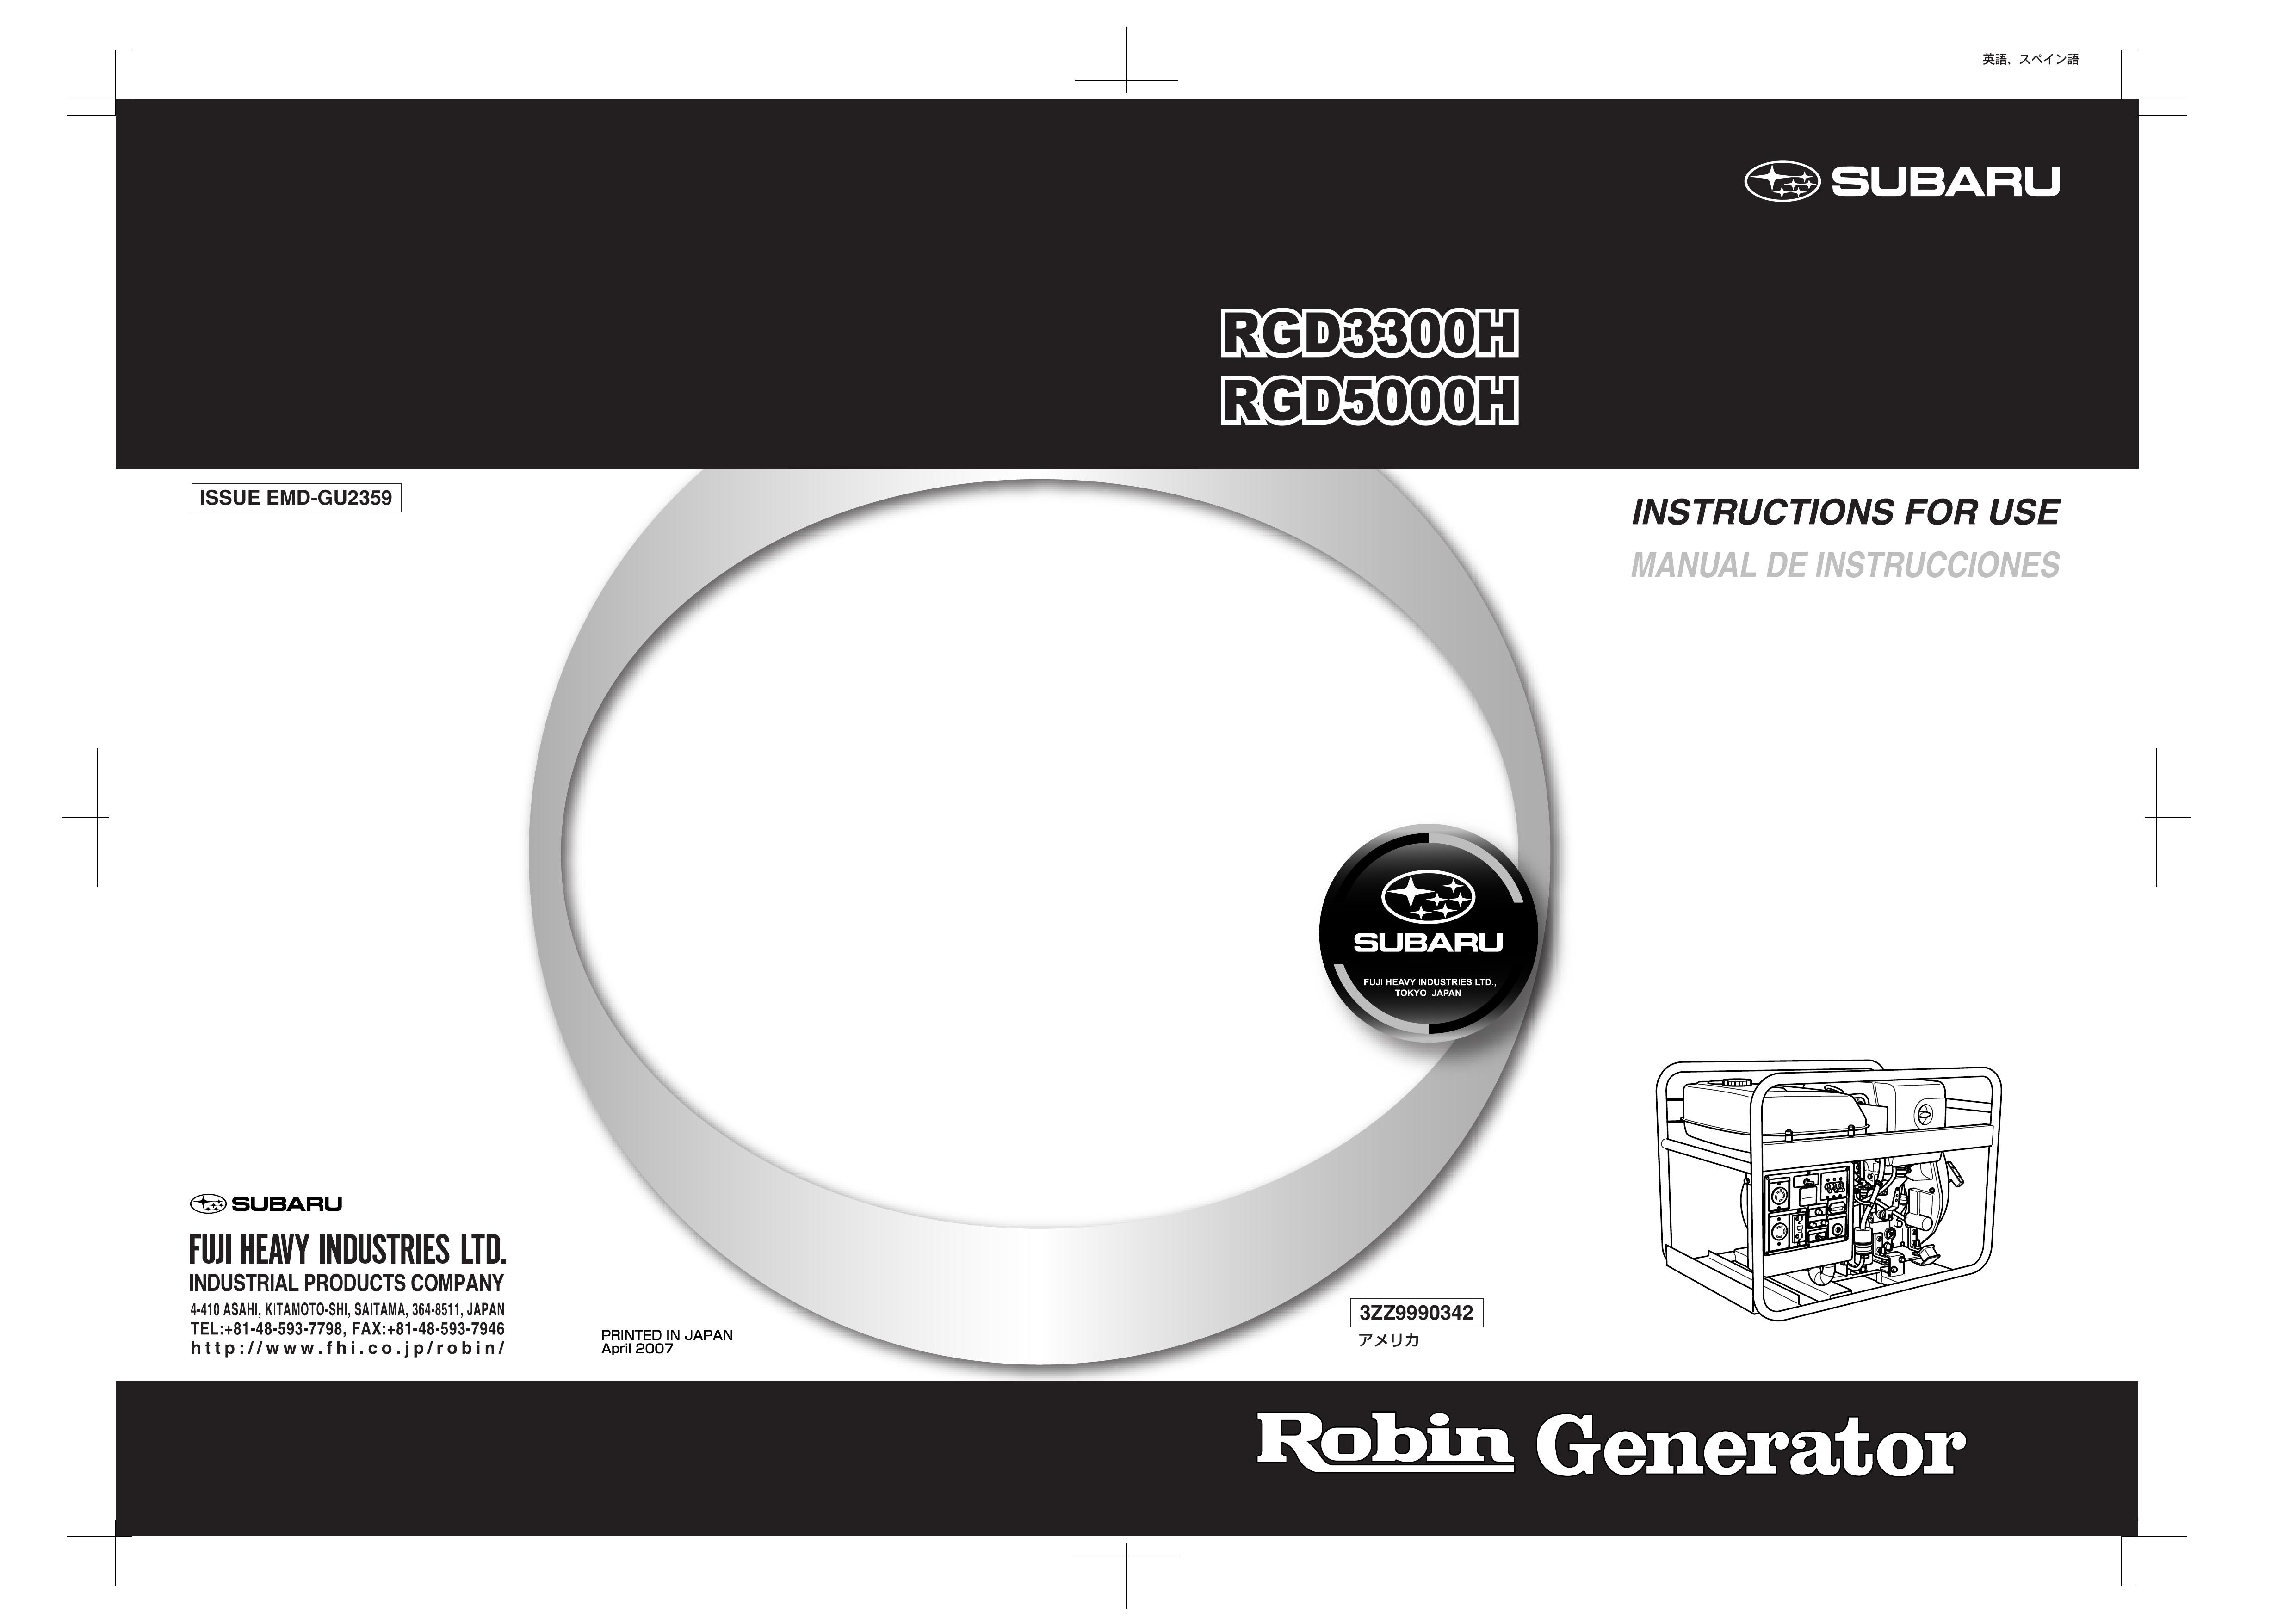 Subaru RGD5000H Portable Generator User Manual